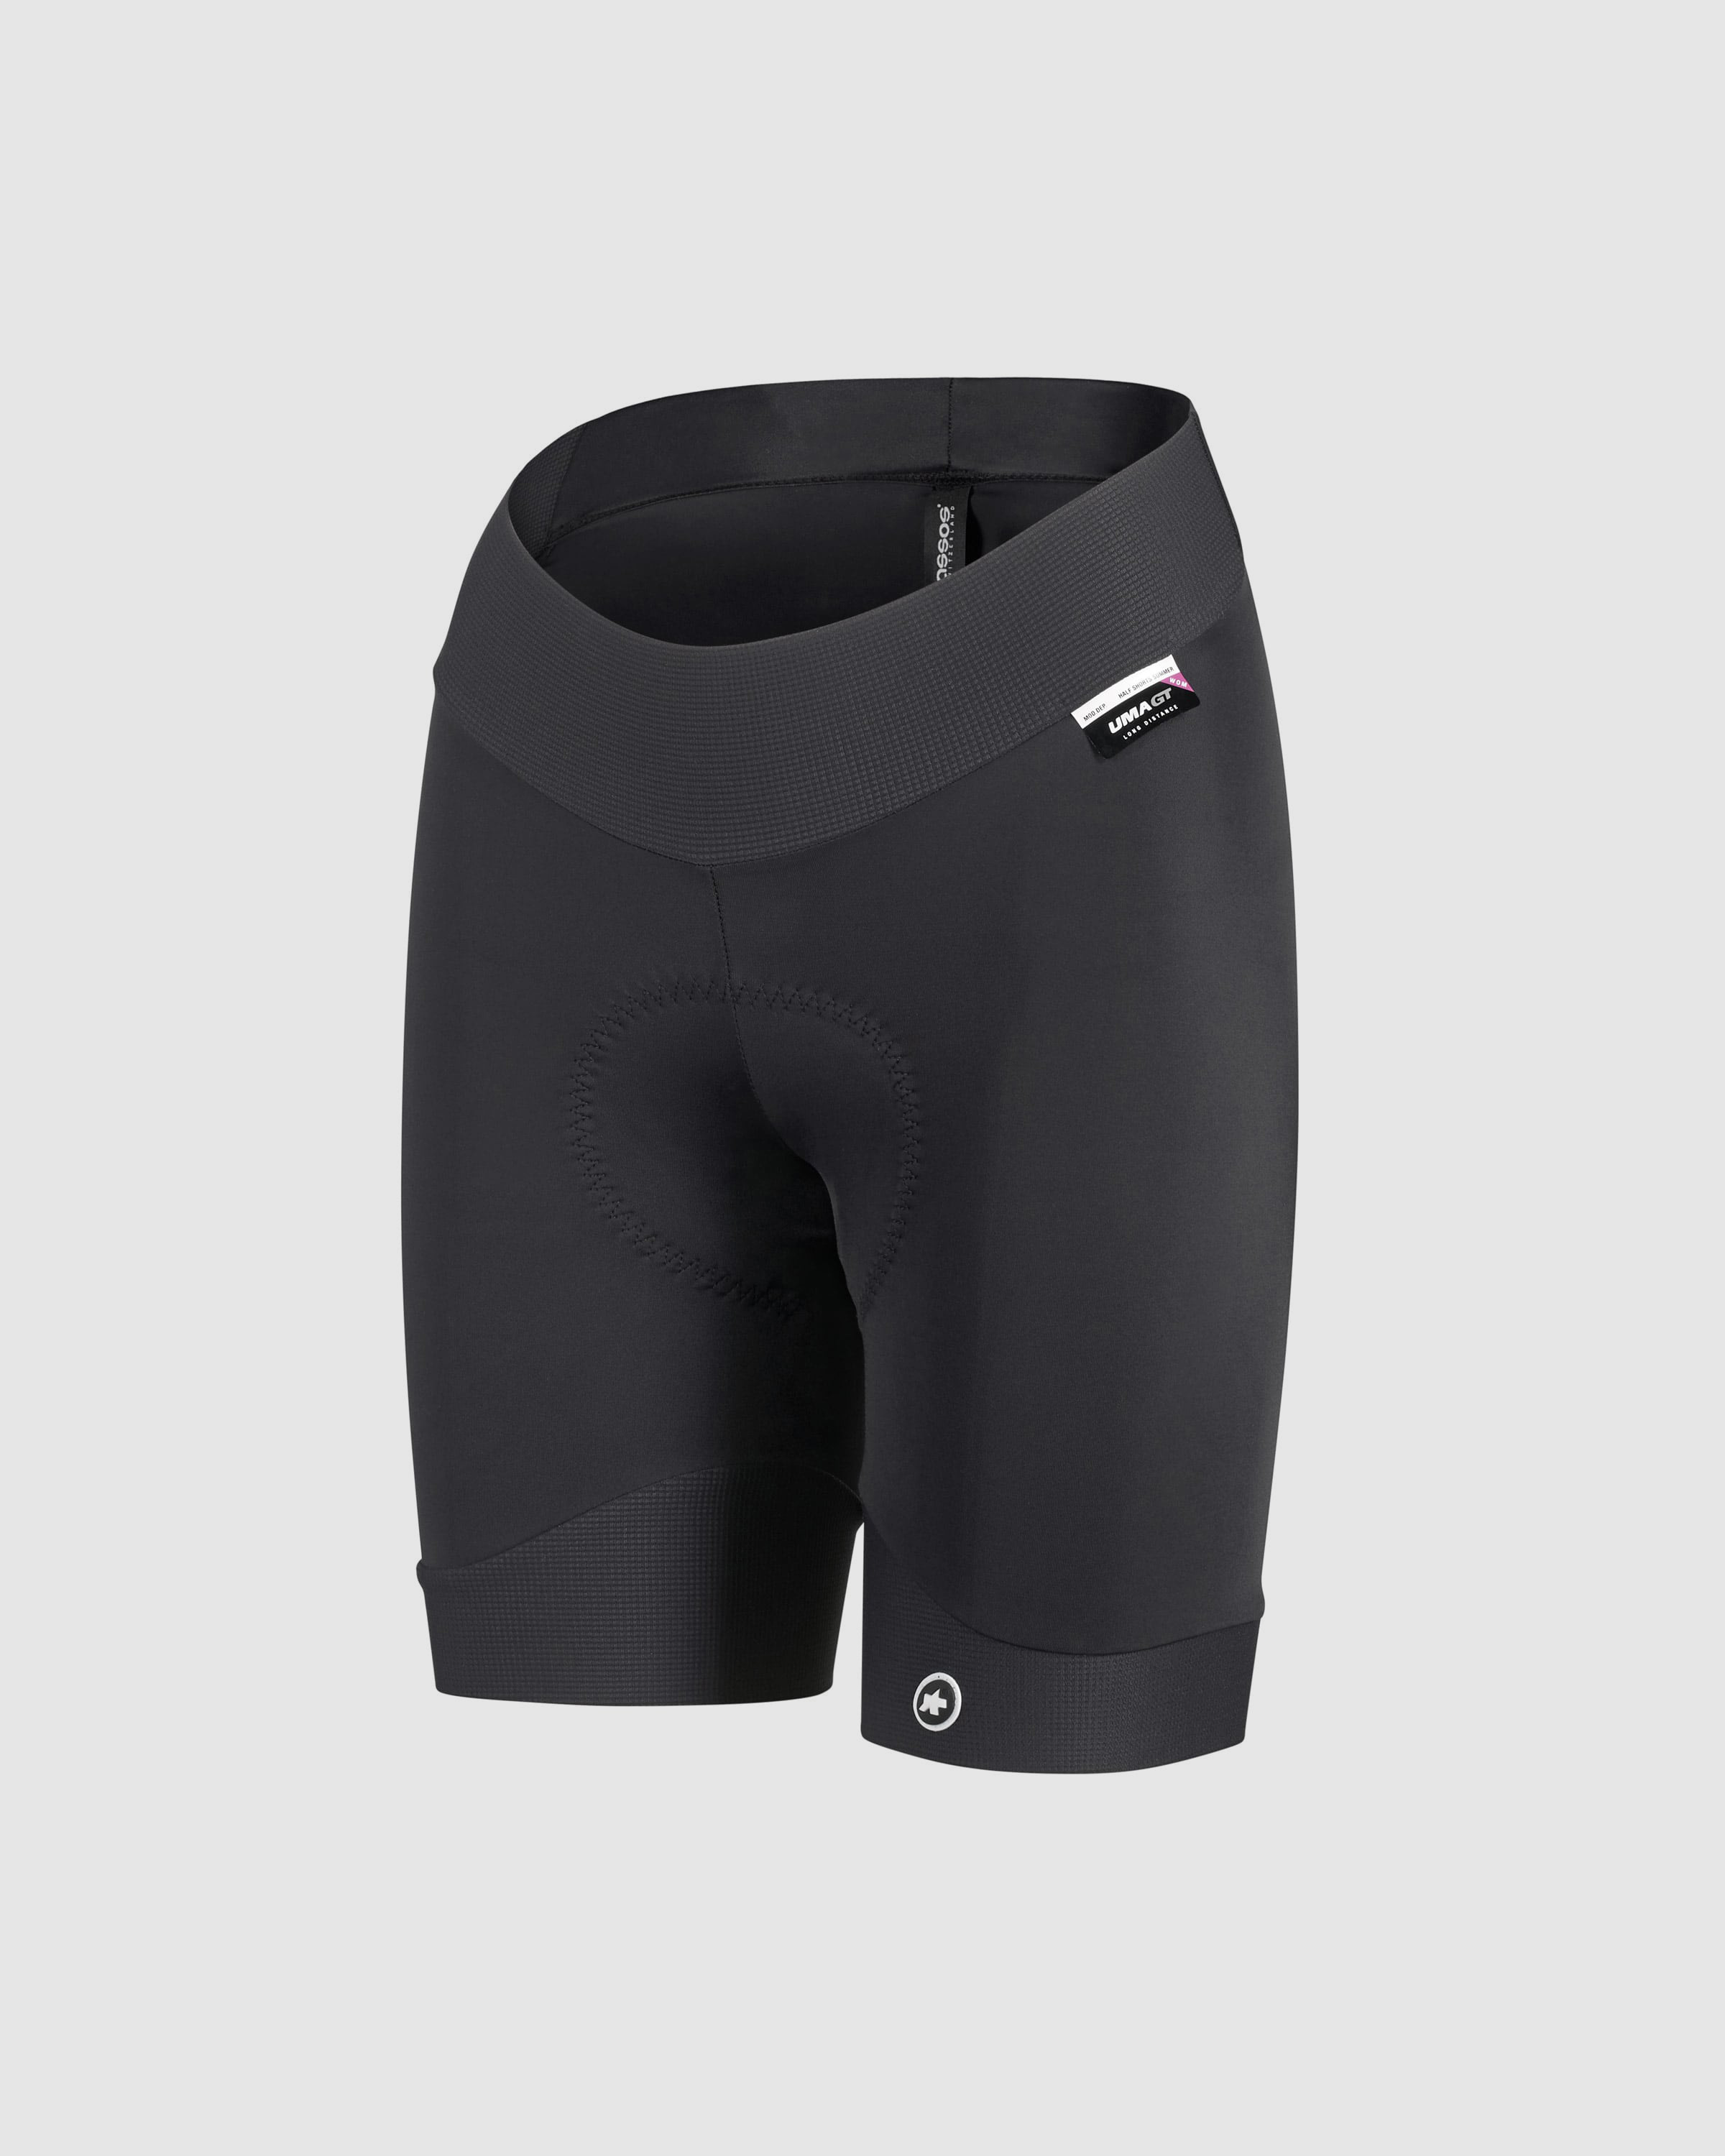 UMA GT Half Shorts EVO - ASSOS Of Switzerland - Official Outlet